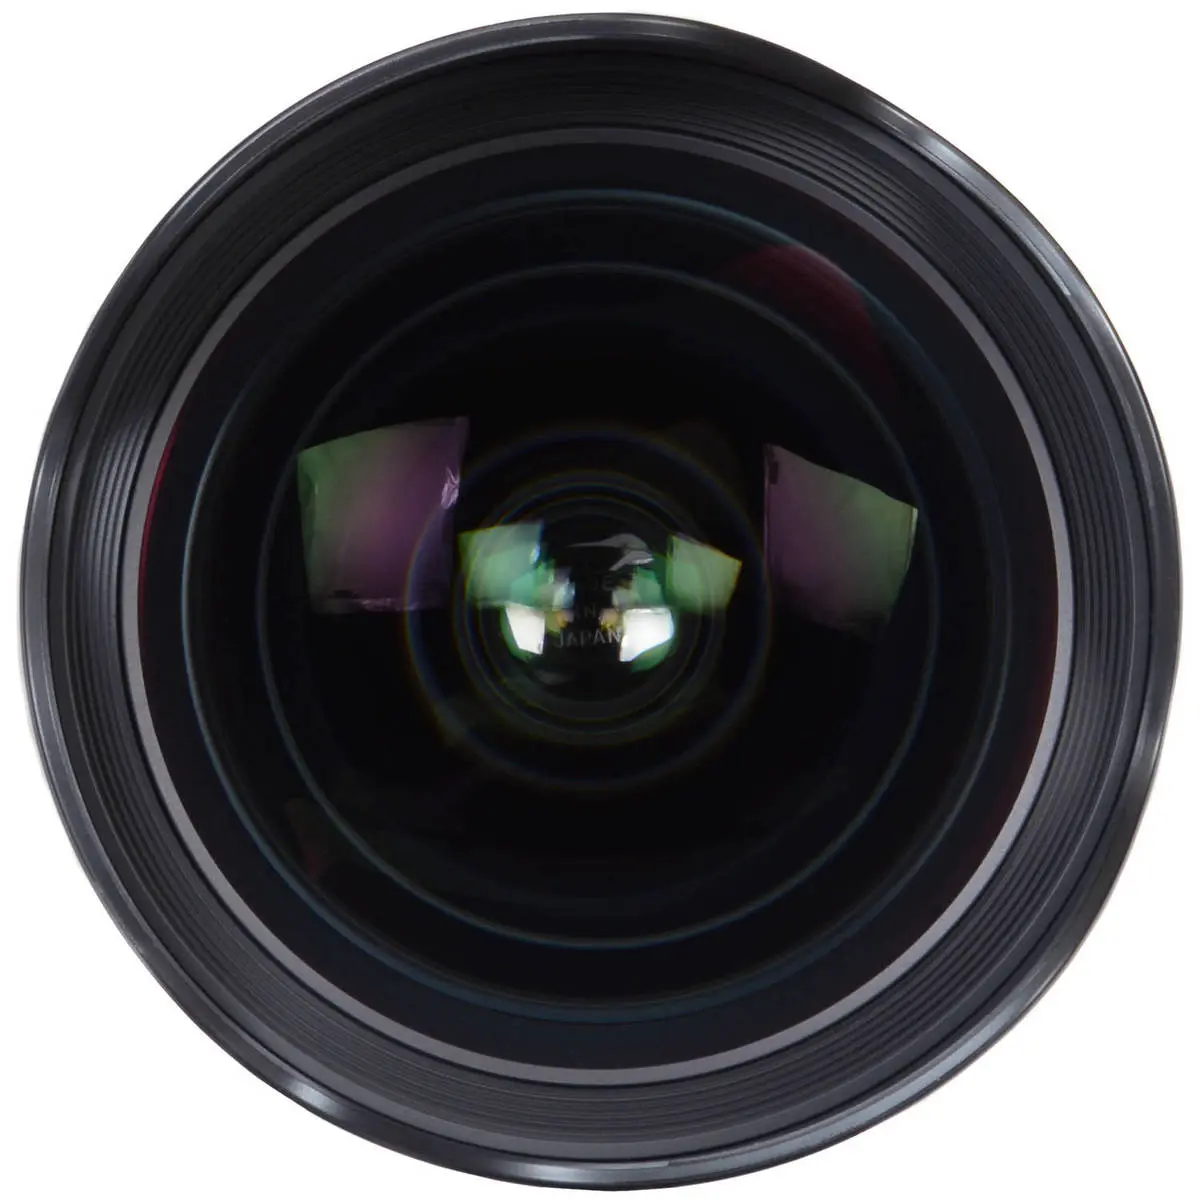 3. Sigma 20mm F1.4 DG HSM | A (Canon) Lens